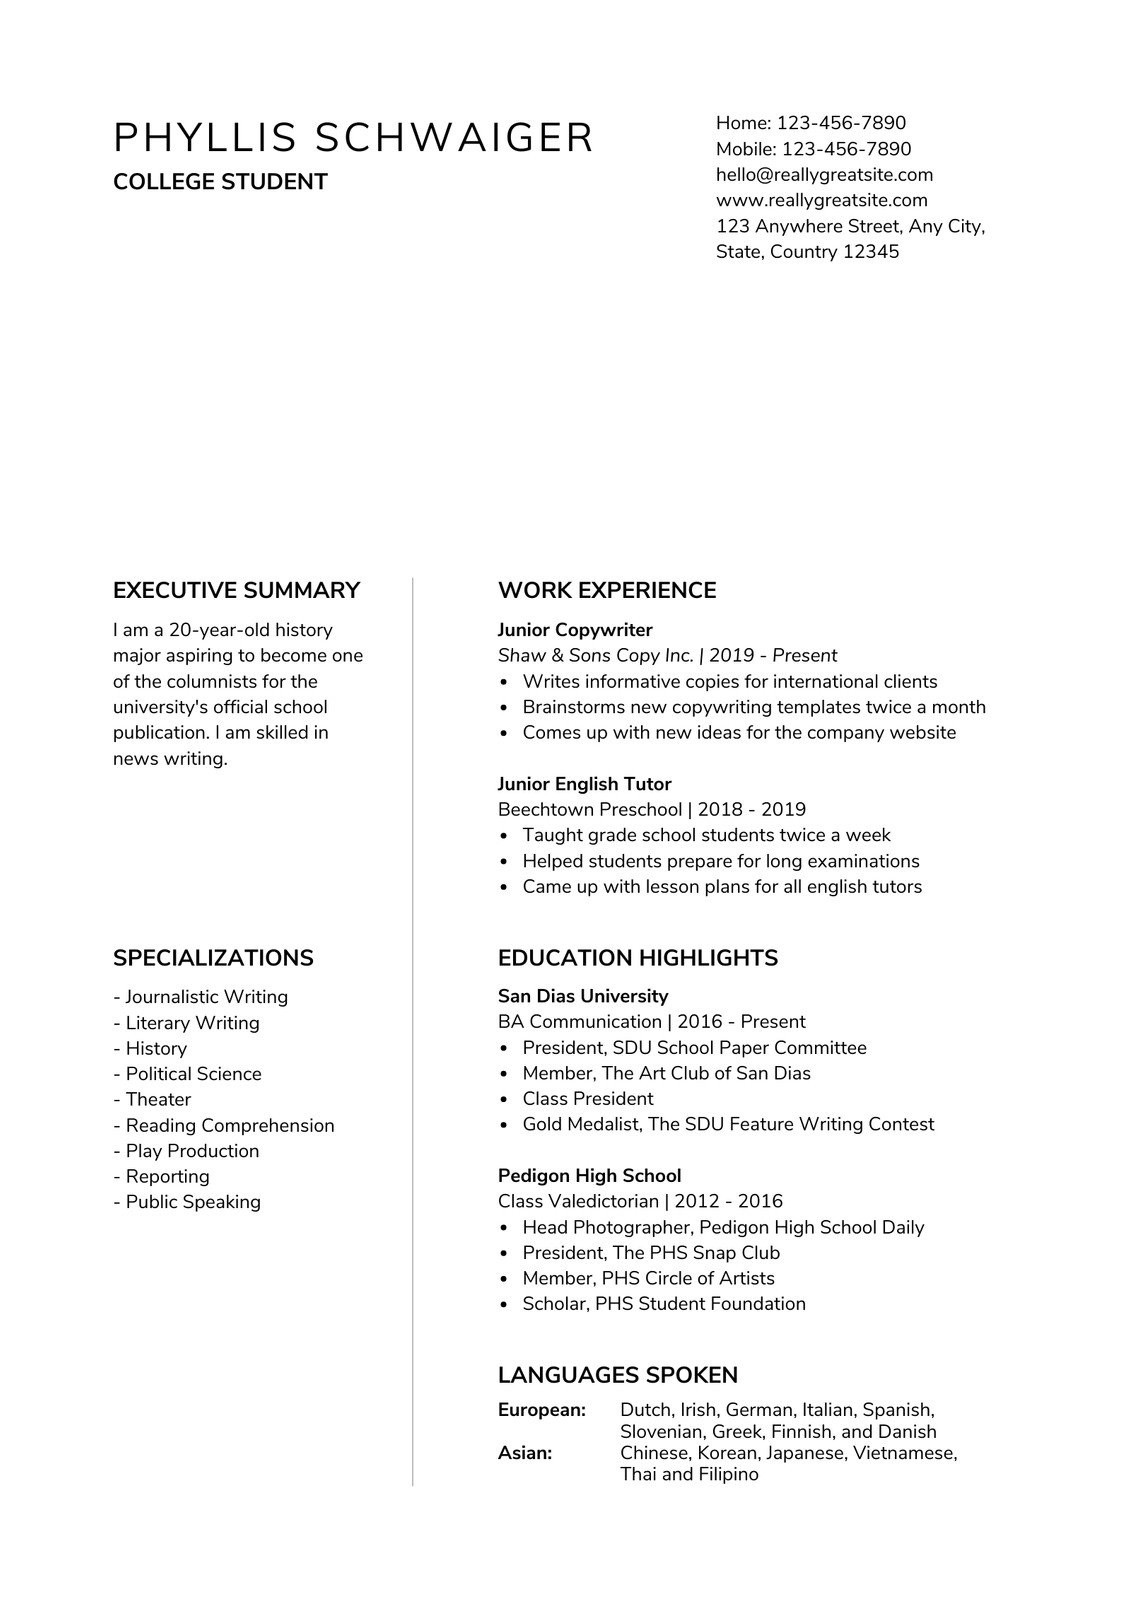 Resume Template Examples for College Students 35lancarrezekiq Free Printable, Customizable College Resume Templates Canva